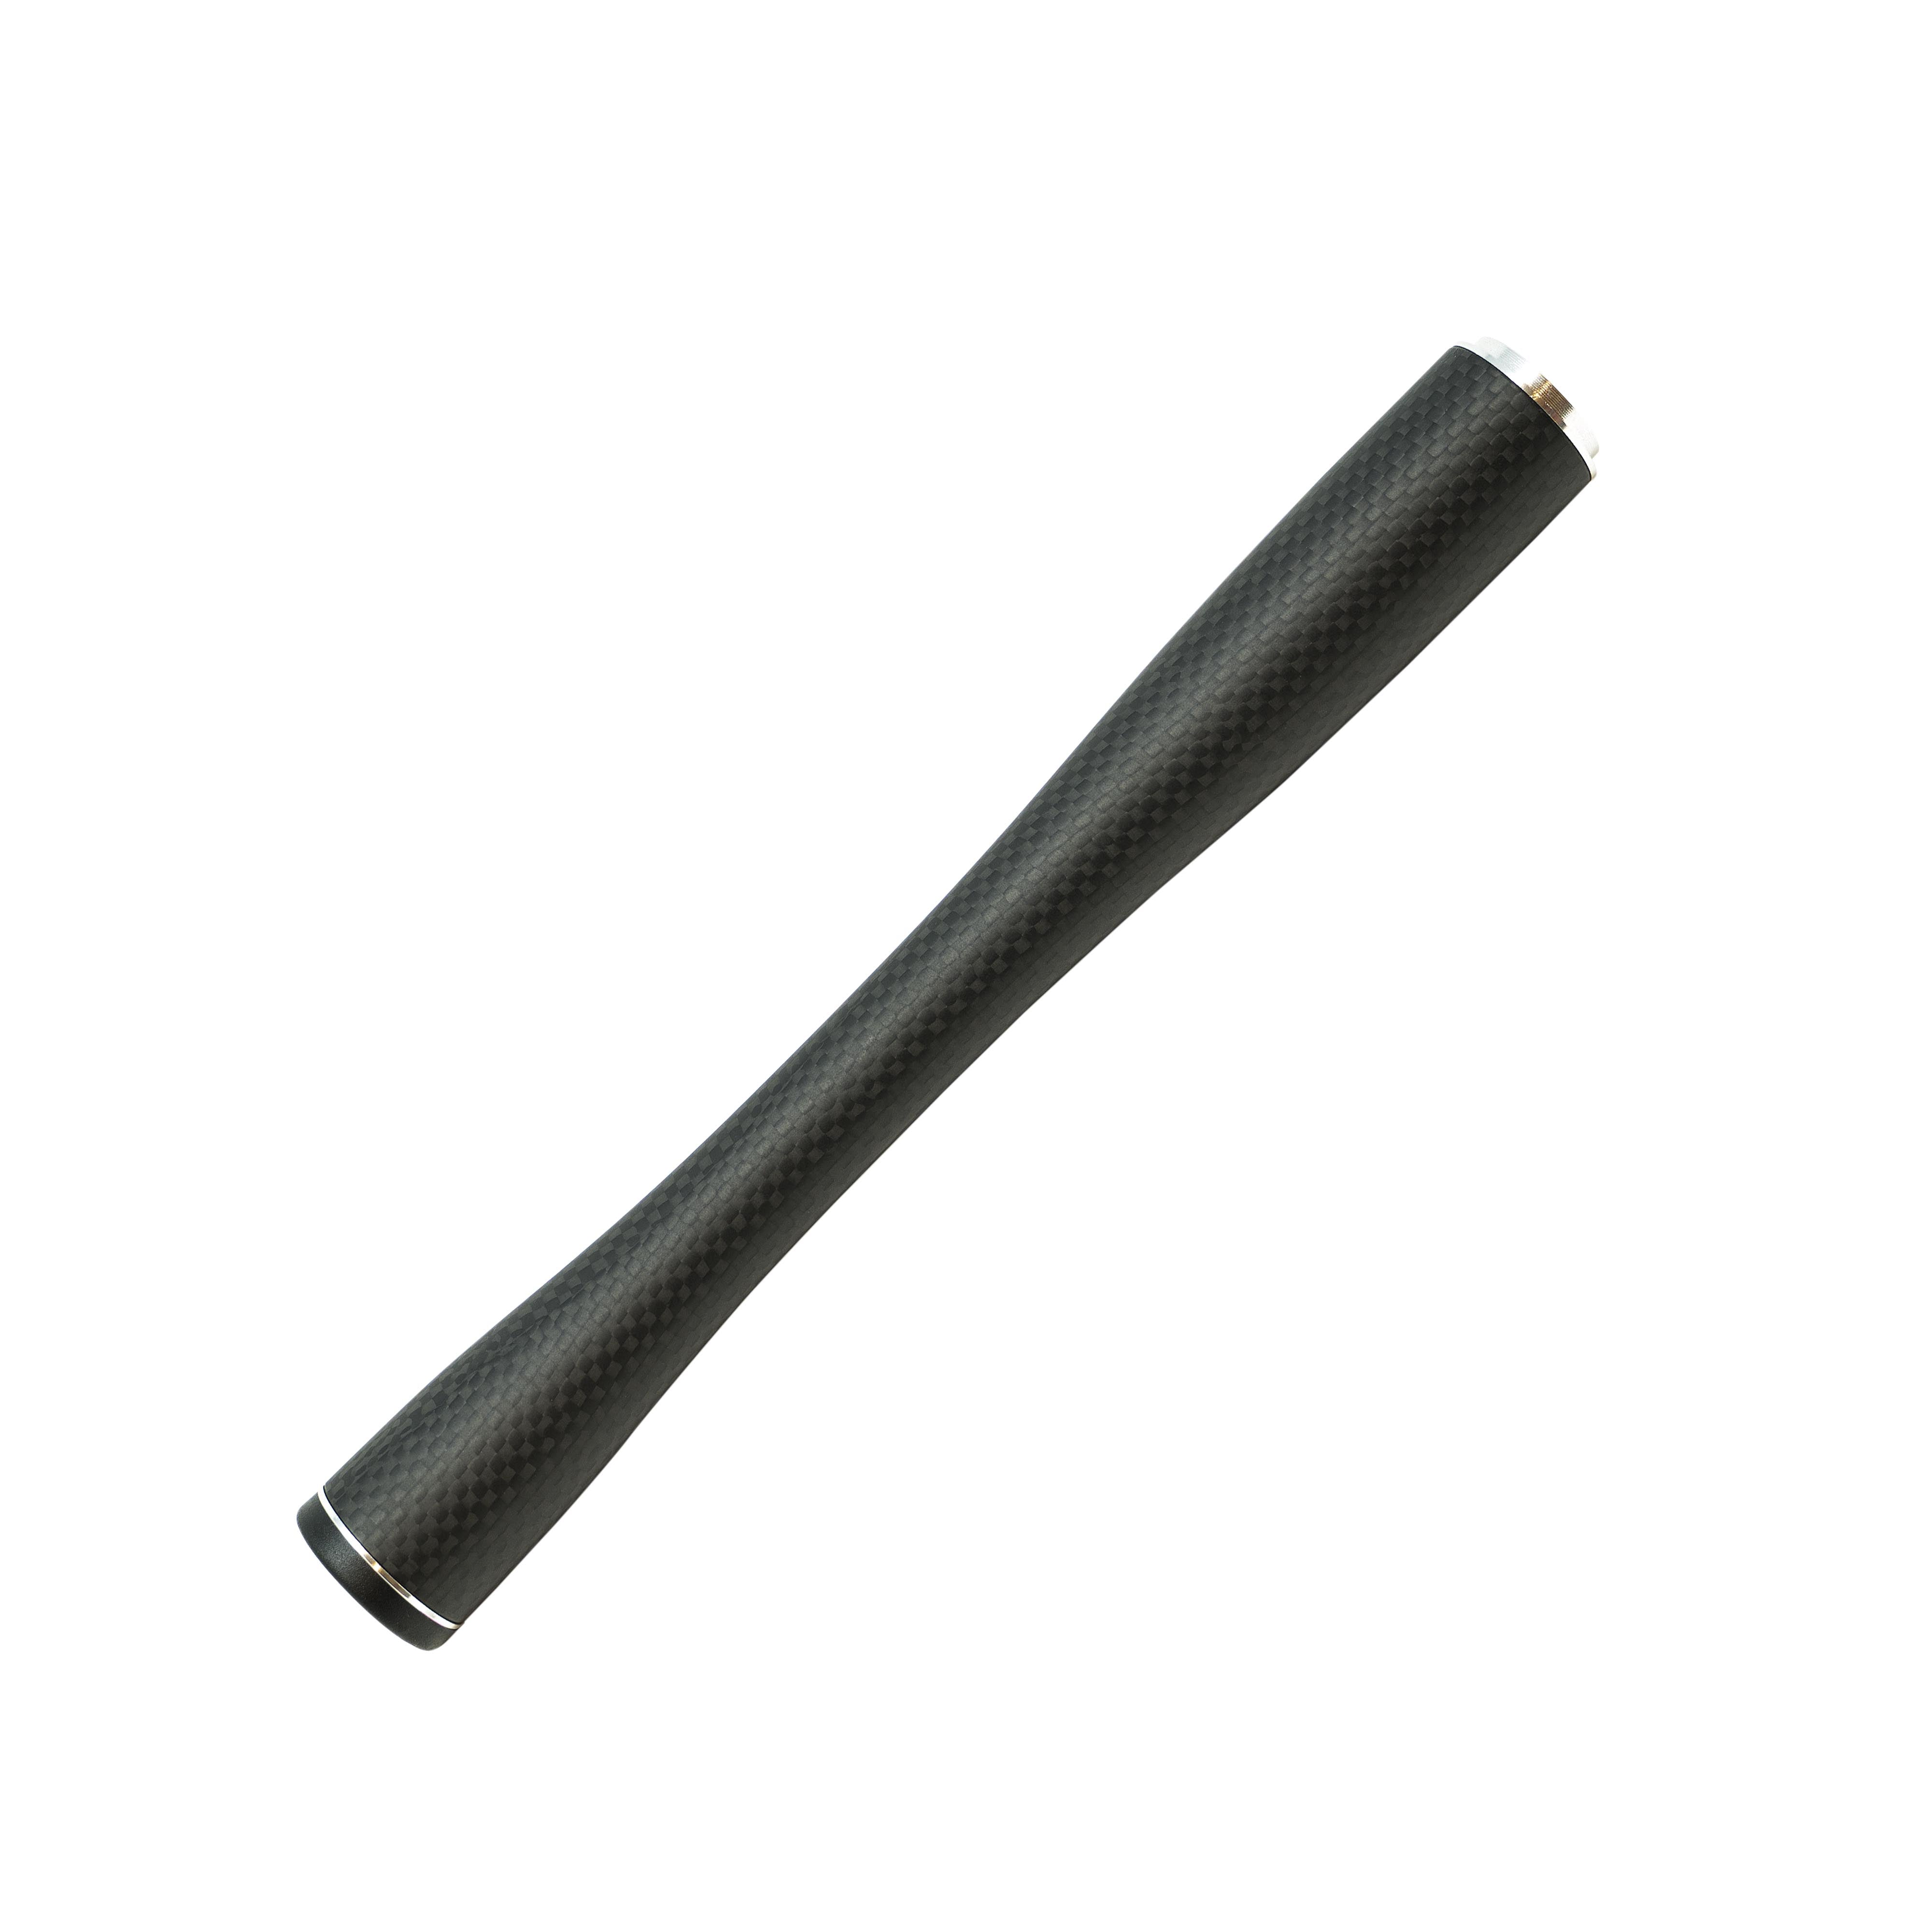 G2 9 Full Length Carbon Handle Grip Kit for Casting Rods, Silver / Matte 3K Carbon